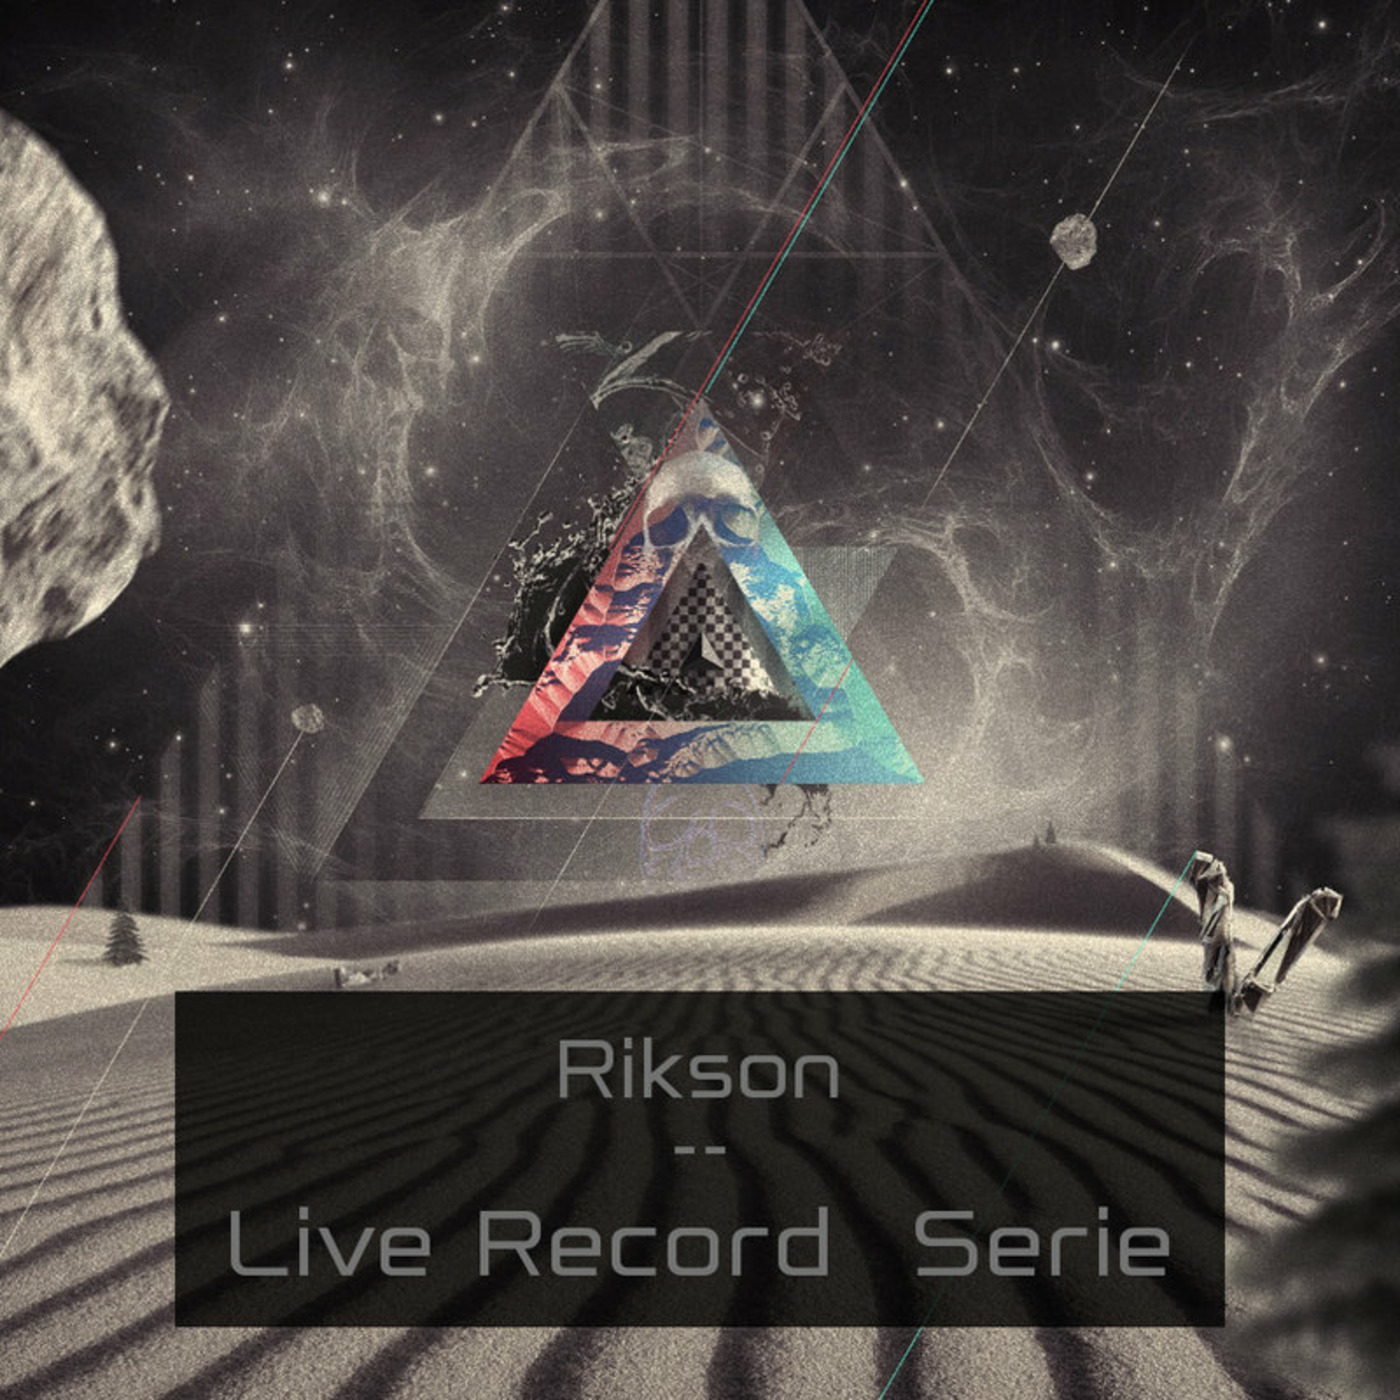 Rikson @ my b2b & Live Records (Hearthis)